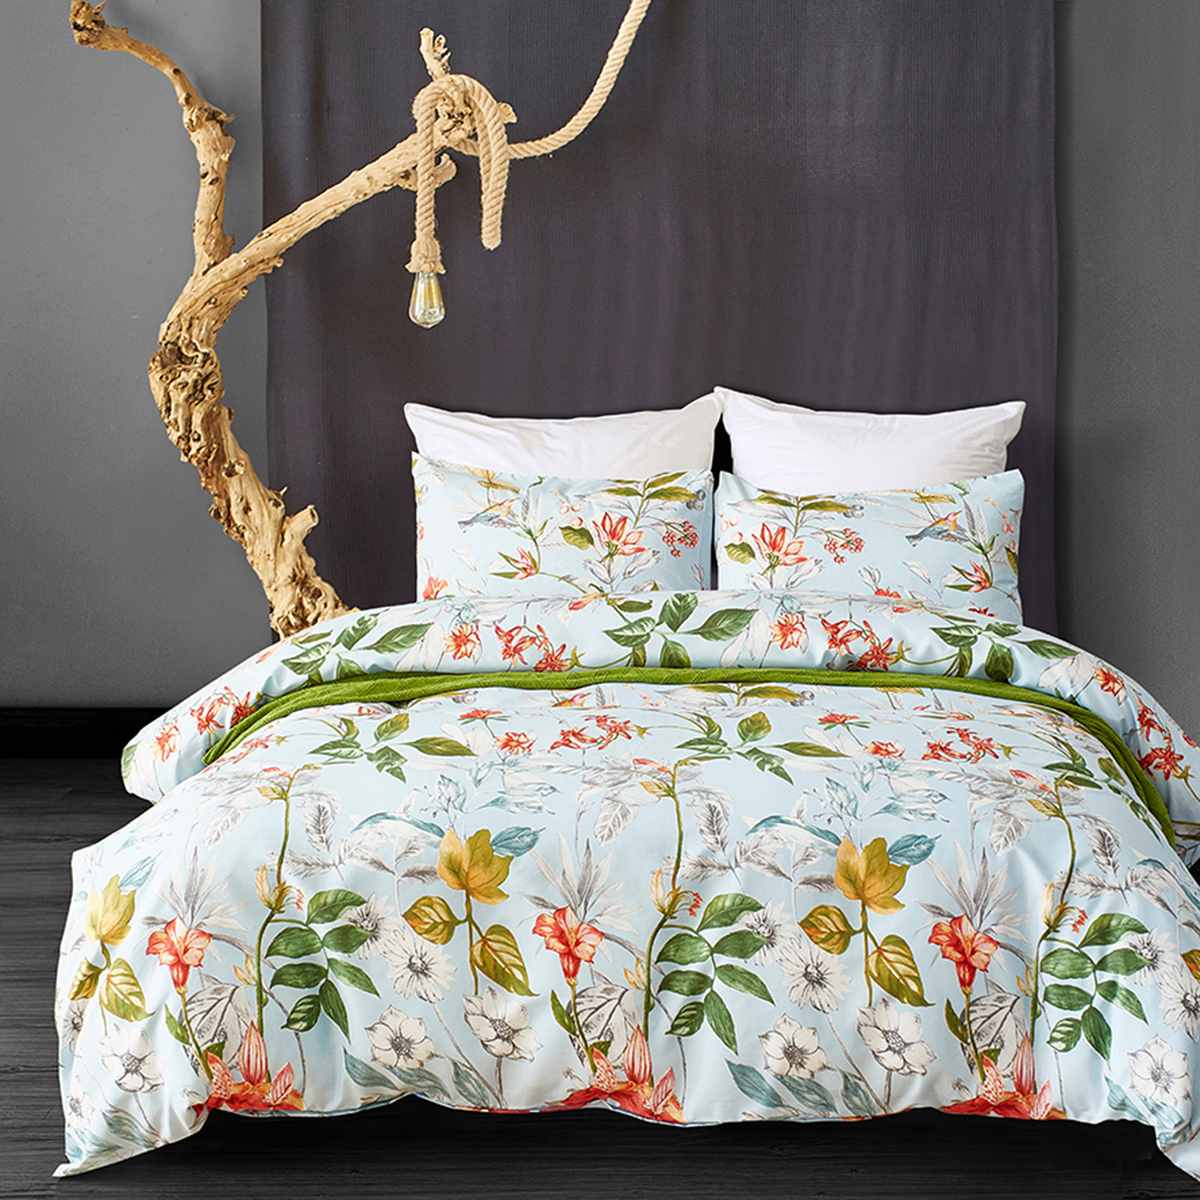 3pcs Sets Home Textile Floral Pattern Bedding Sets Children's Beddingset Bed Linen Duvet Cover Bed Sheet Sets Twin/Queen/King